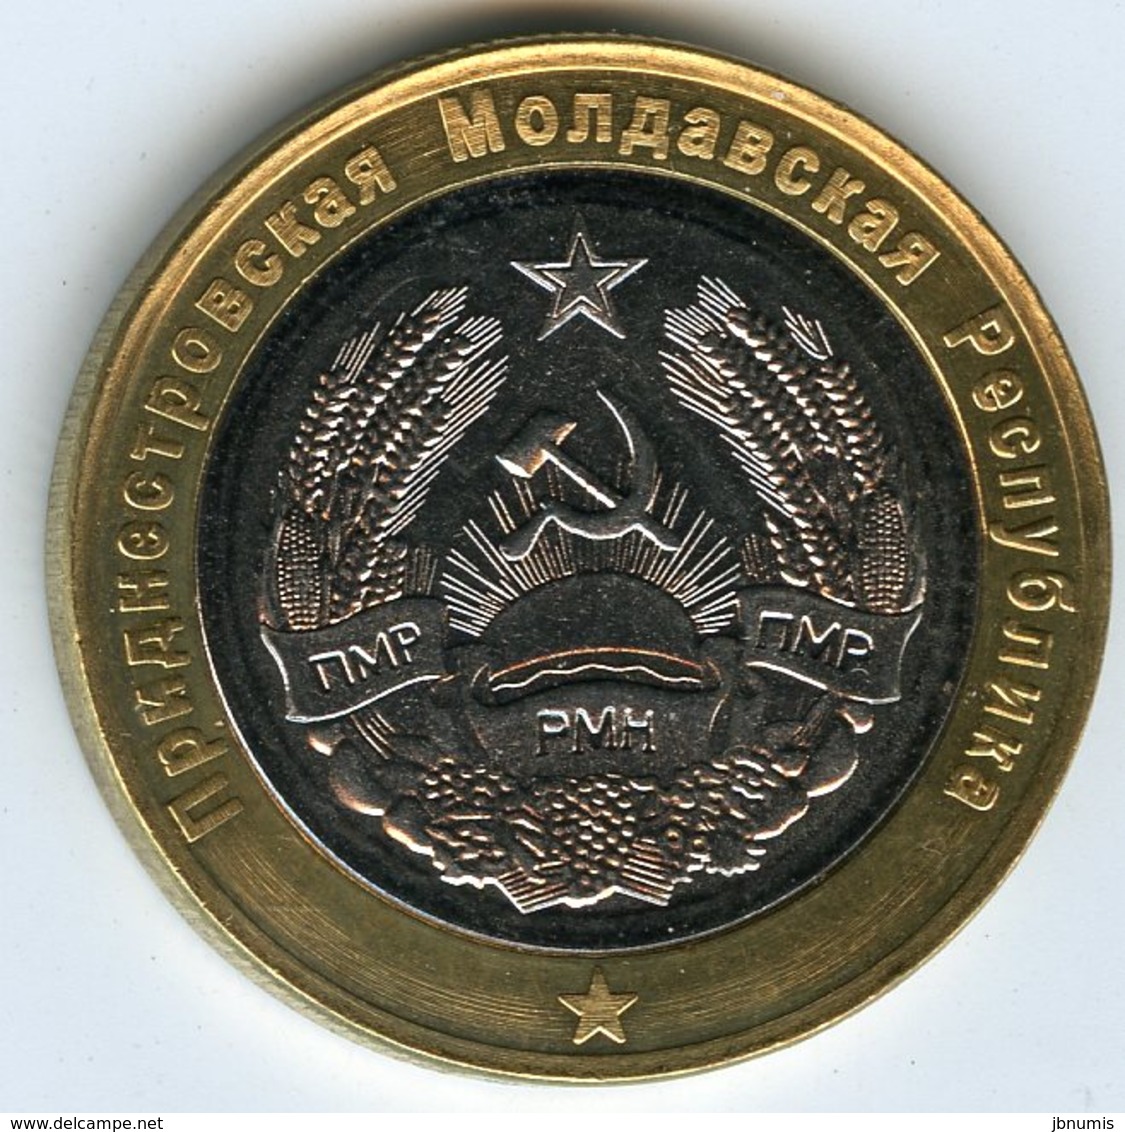 Moldavie Moldova Transdniestrie Transdnistria 100 Rublei 2011 Jean-Paul II Pape Pope UNC - Moldavie